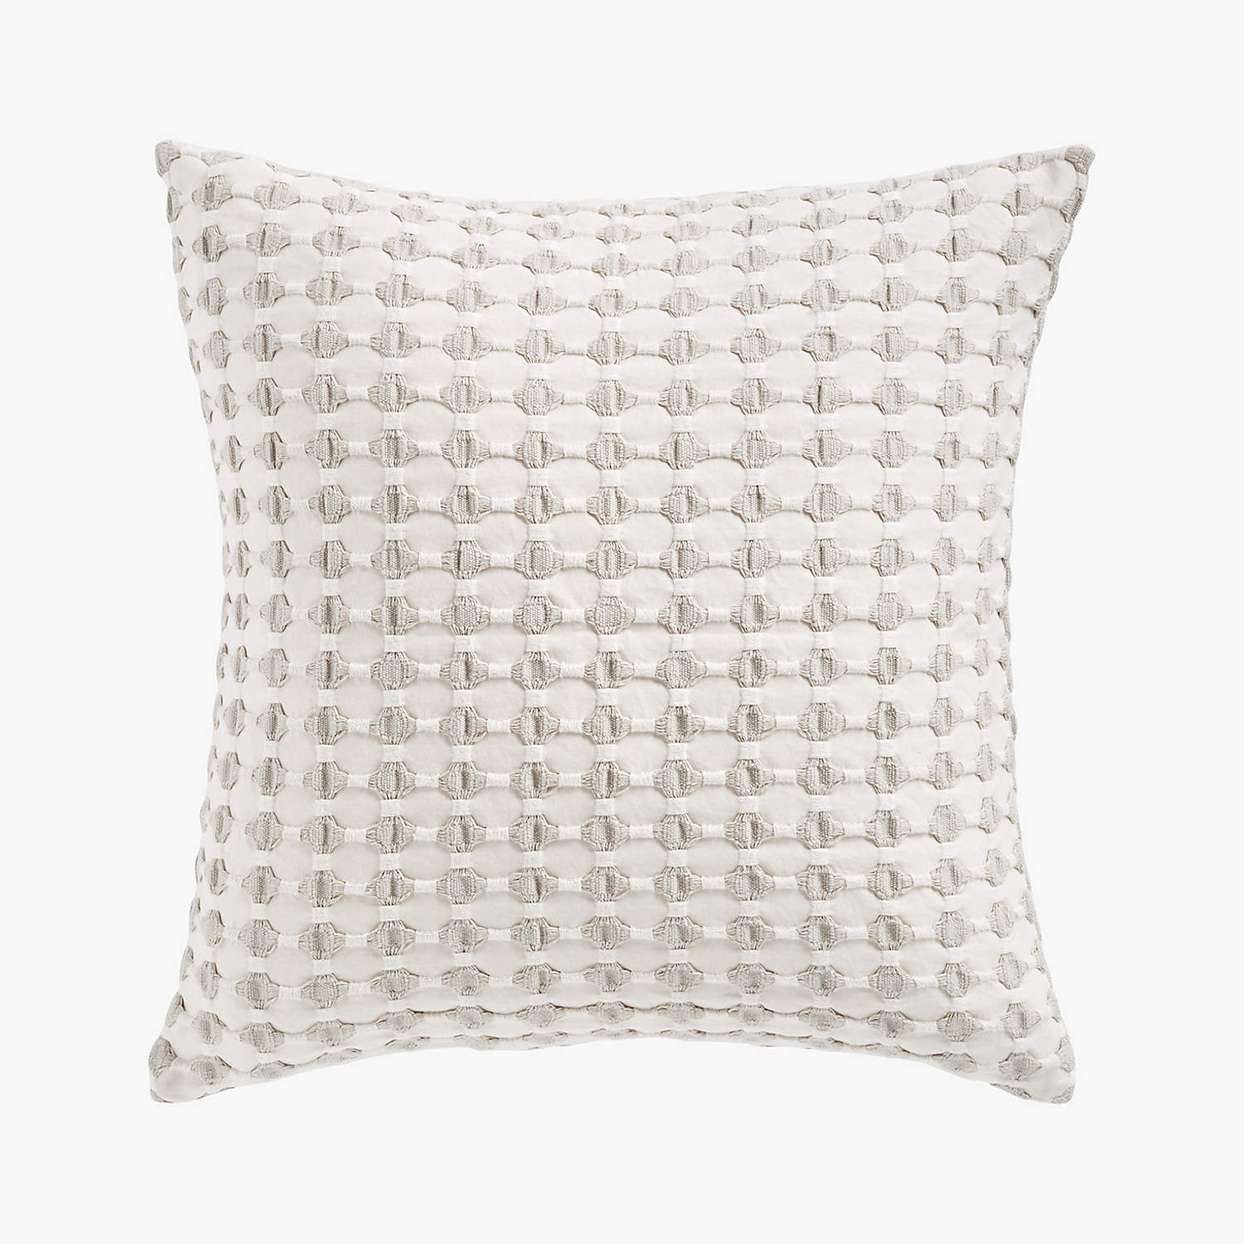 Photo of a 20" Estela Gray and White Pillow